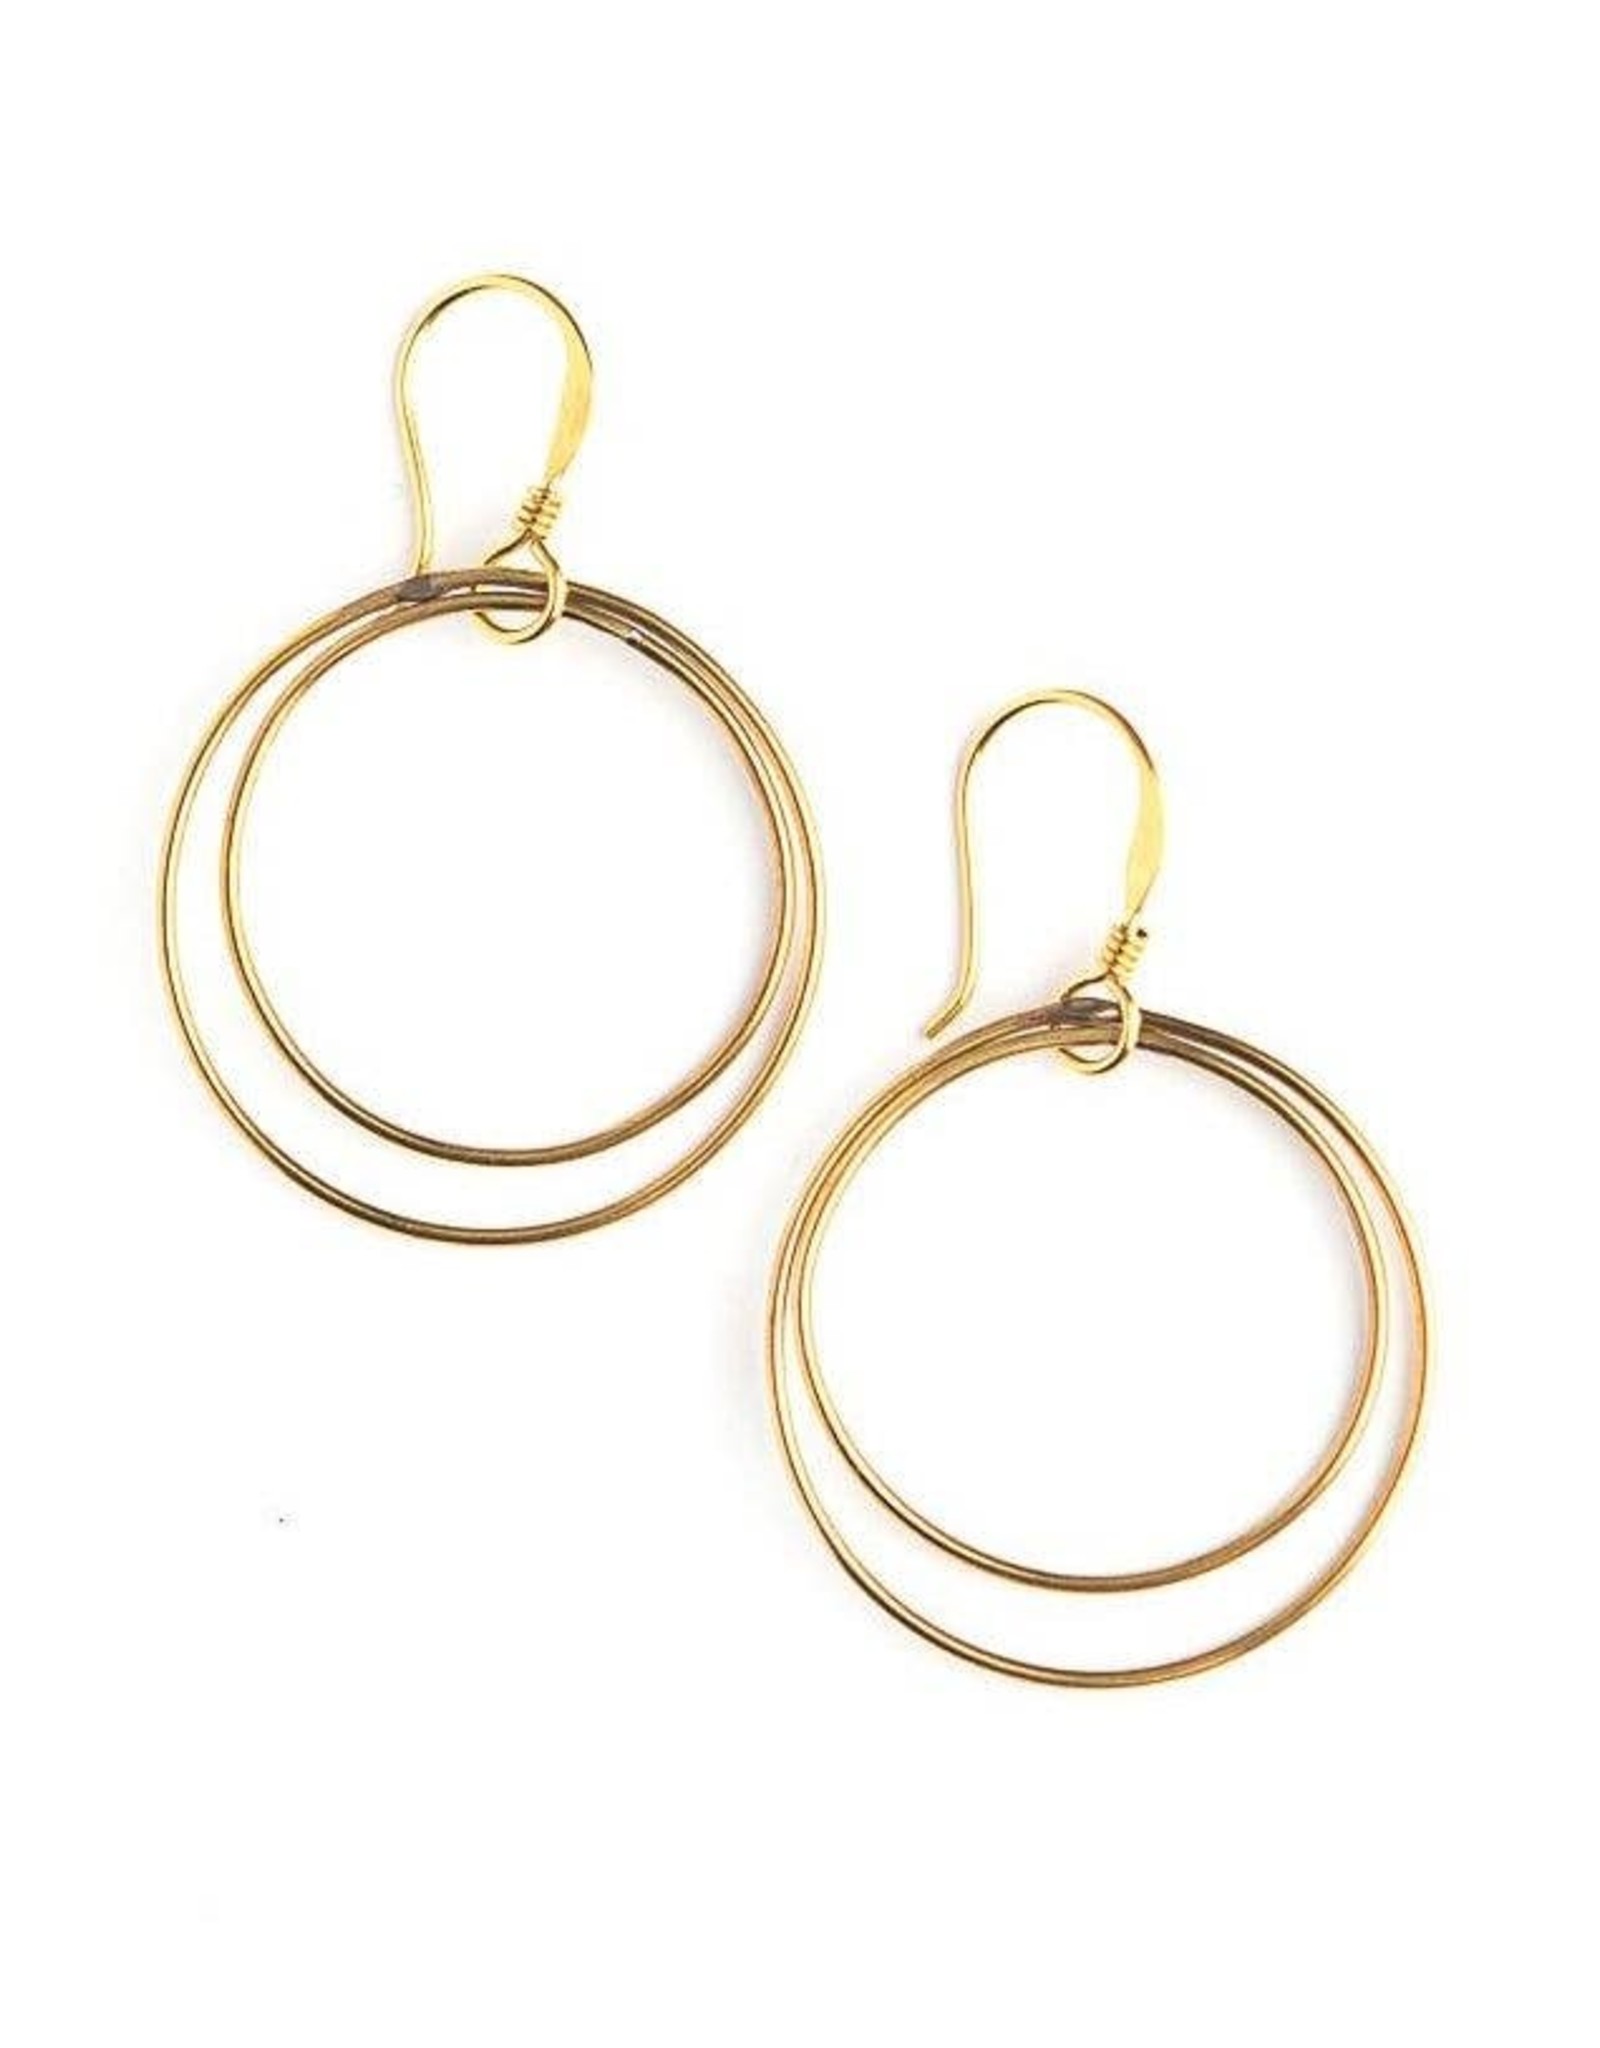 Fair Anita Double Moon Earrings - Gold